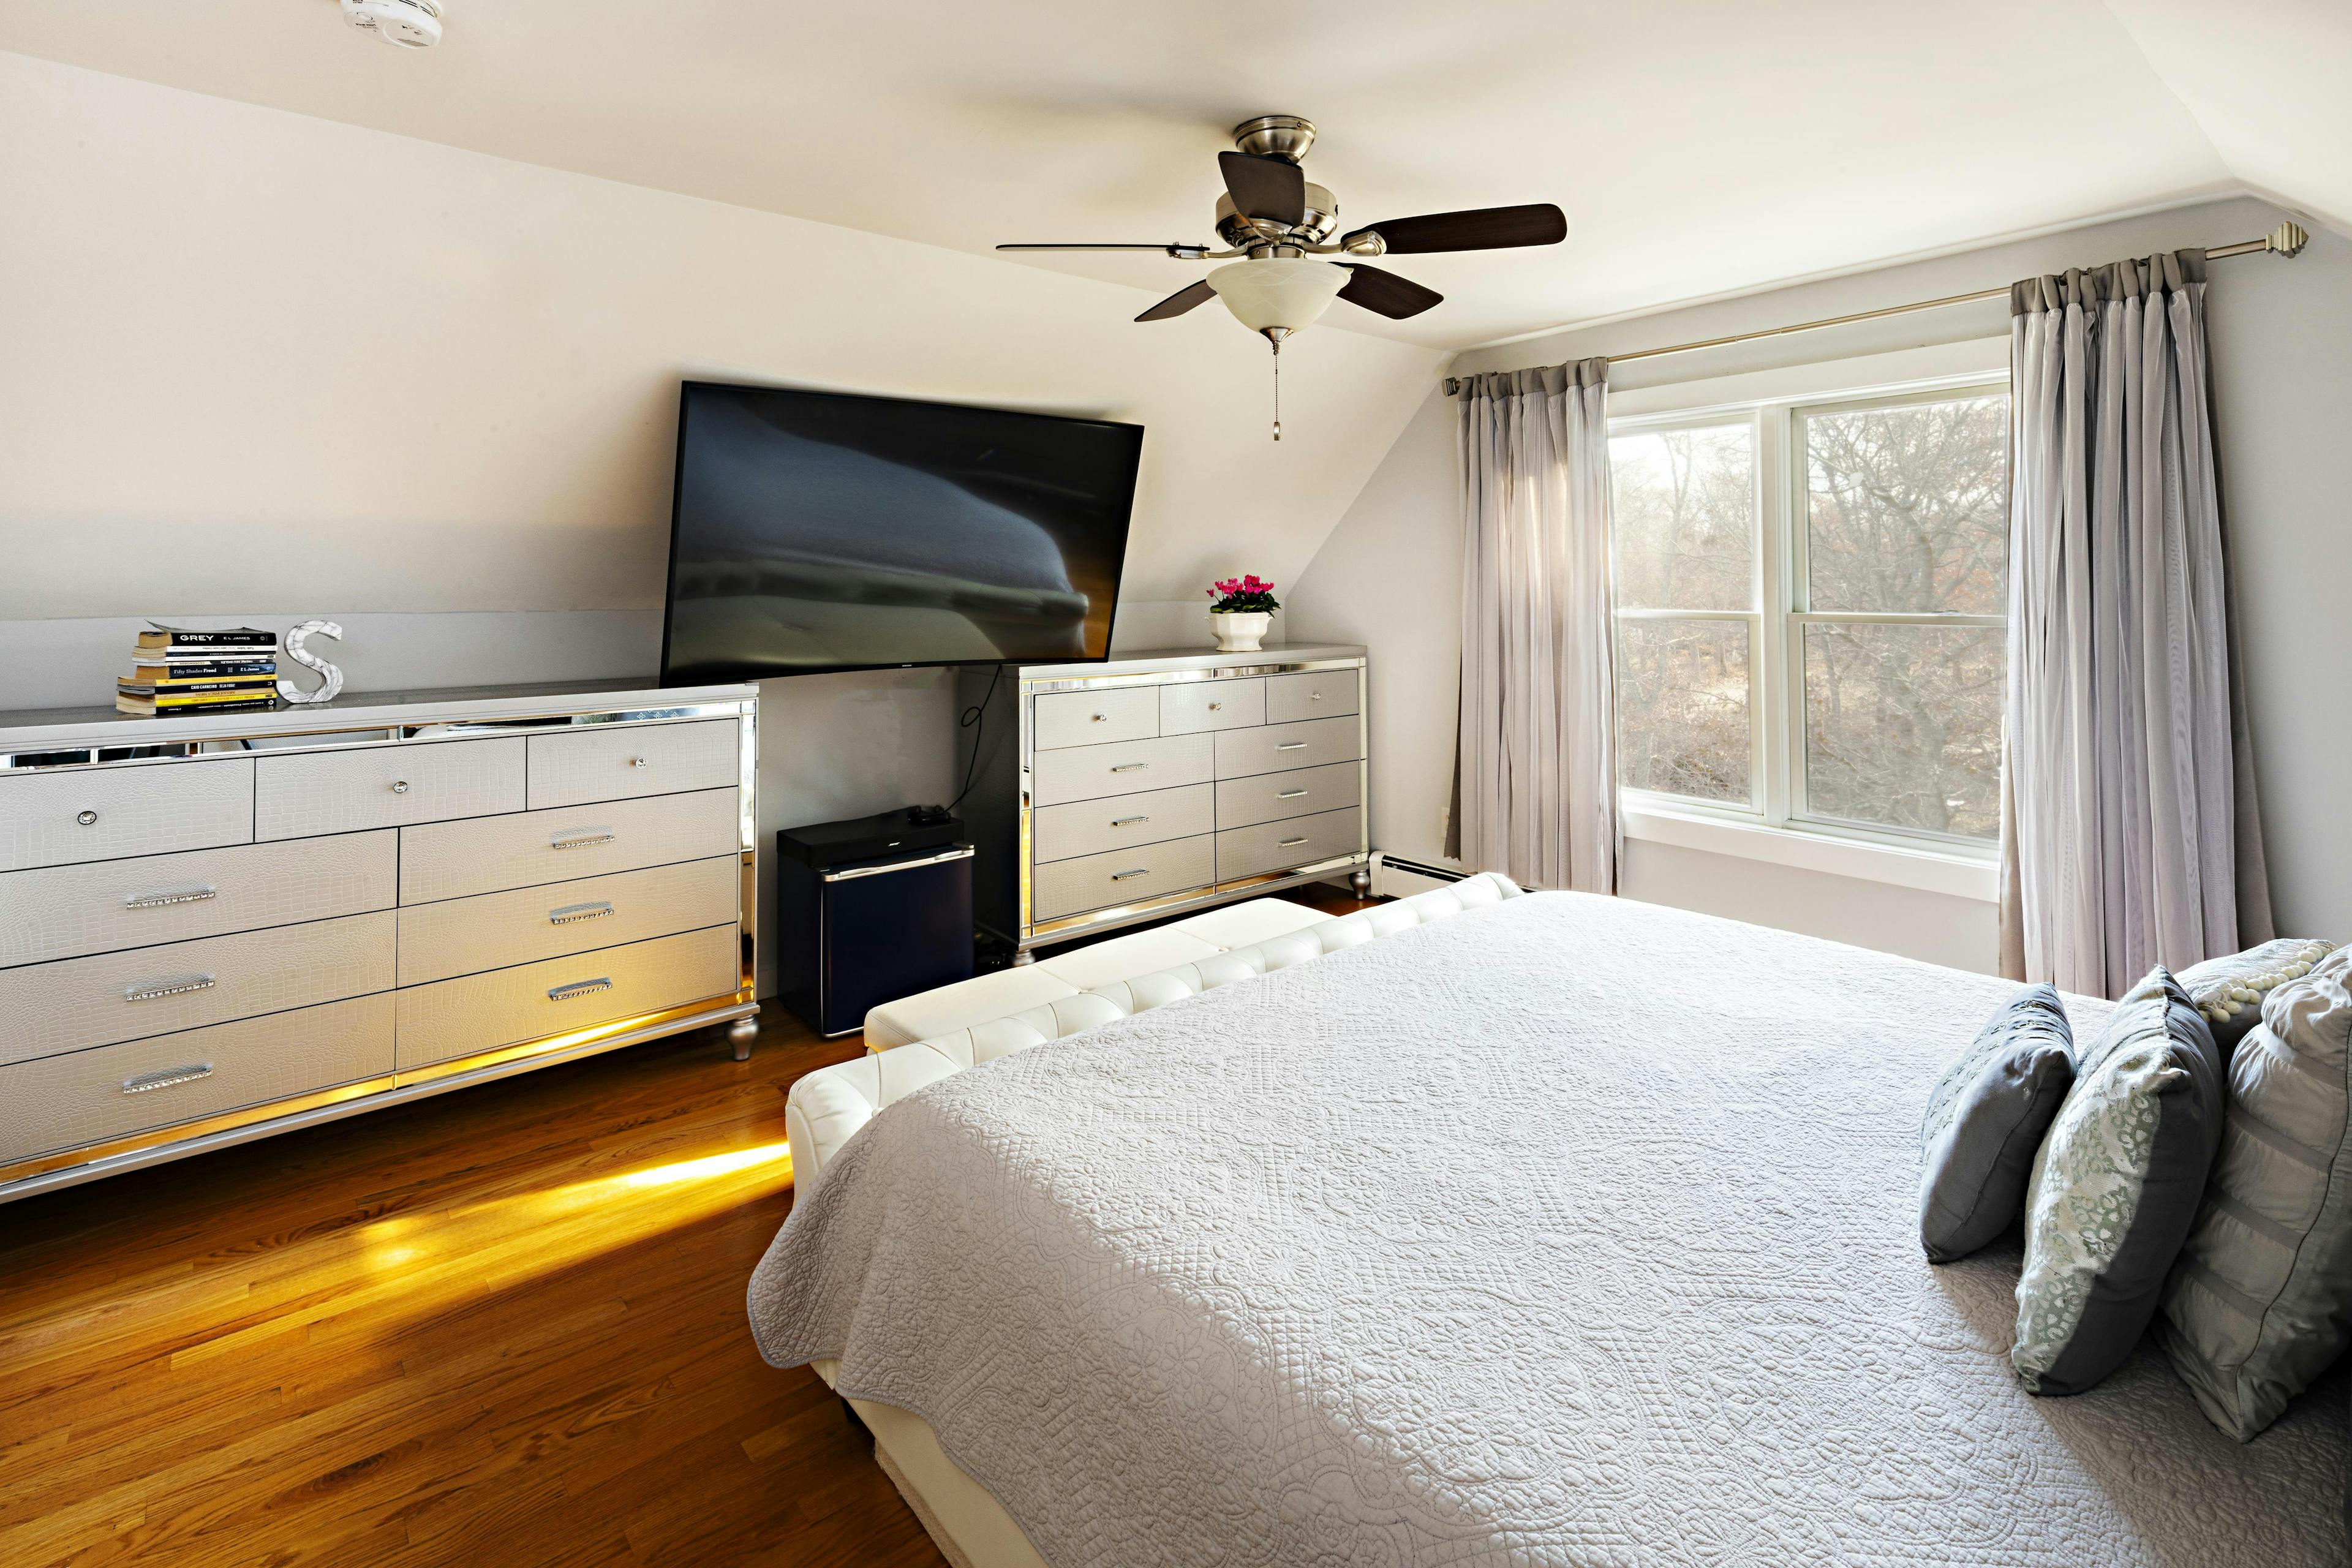 Image 2 - 3 Bedroom Rental in Oak Bluffs, Campgrounds - Sleeps 6